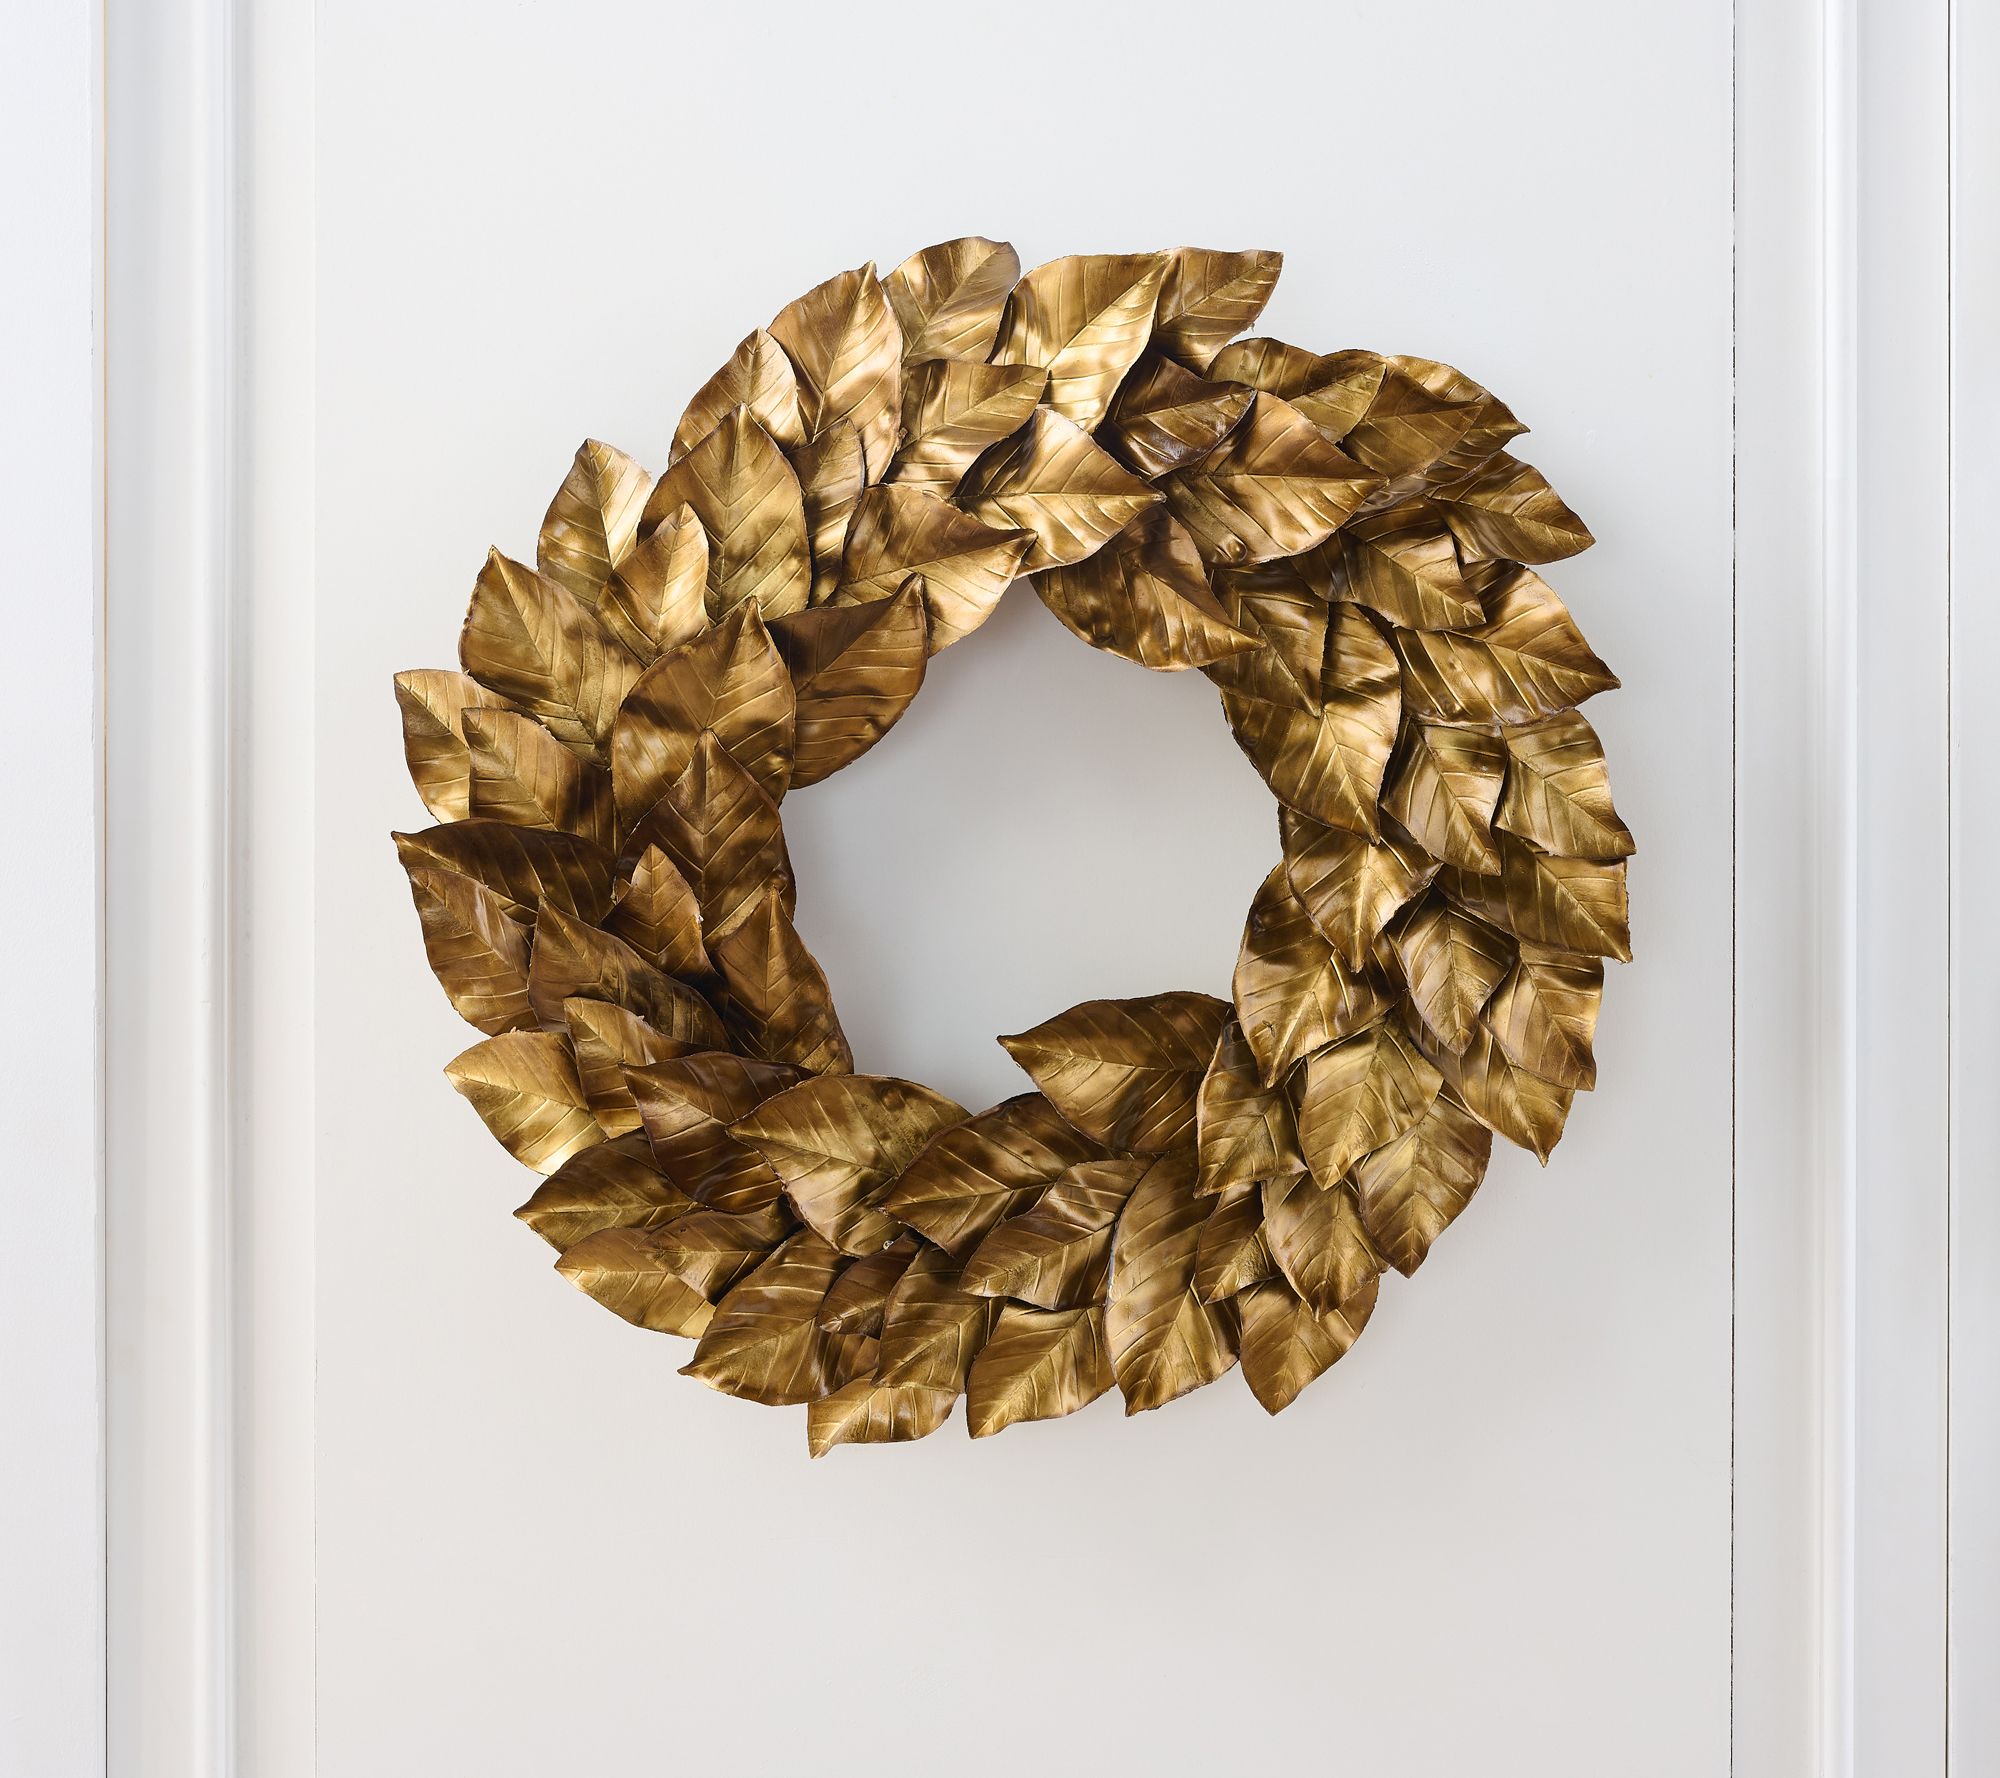 Silver Garden Designs Brass Pine Cone Pendant Necklace Designer